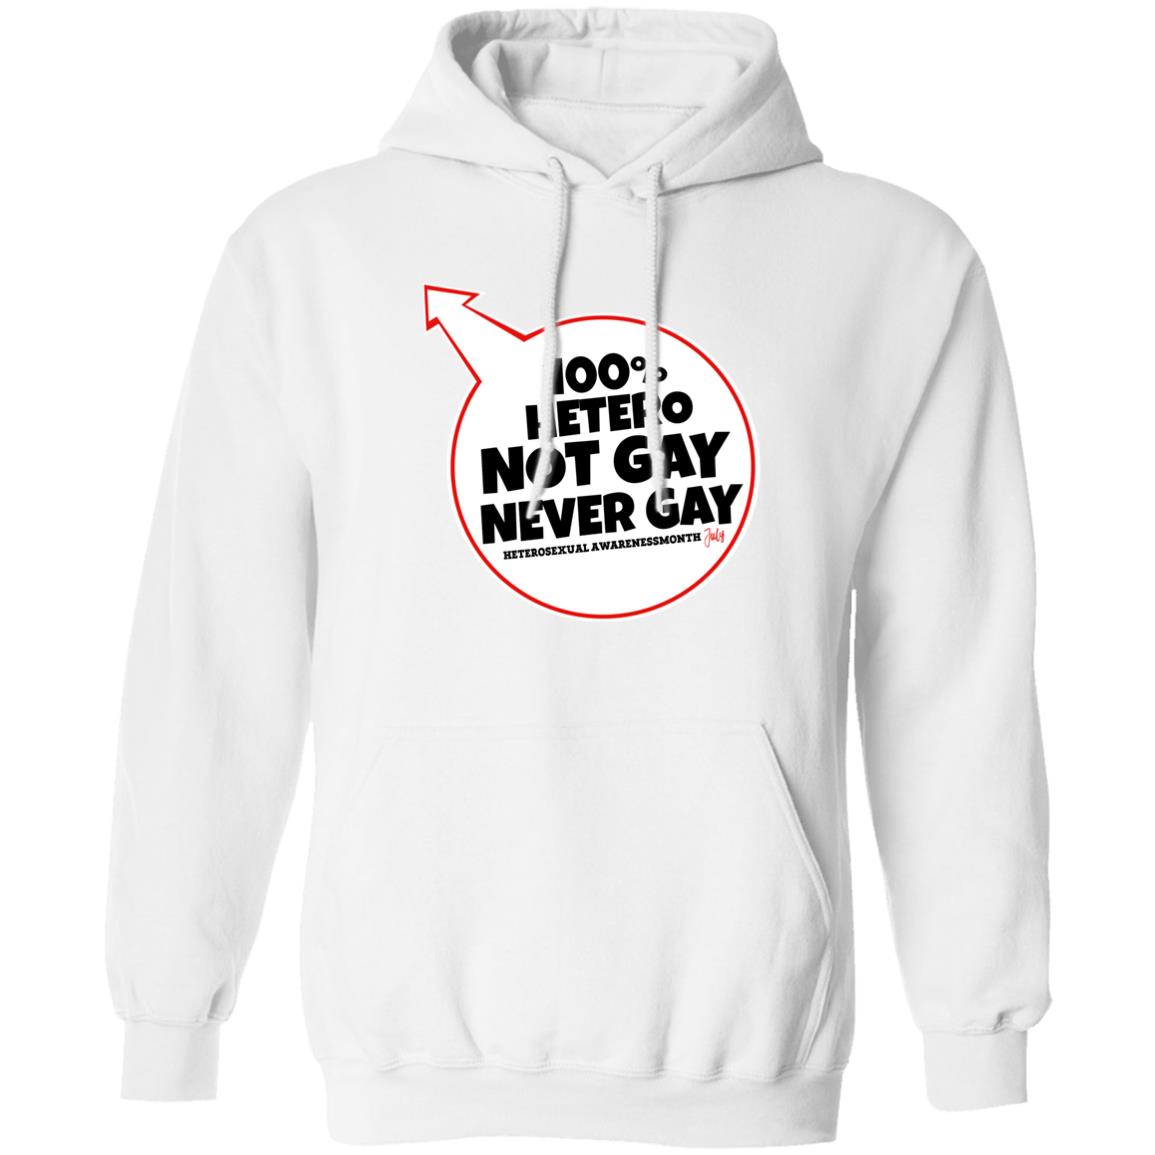 100% Hetero Not Gay Never Gay Shirt 1